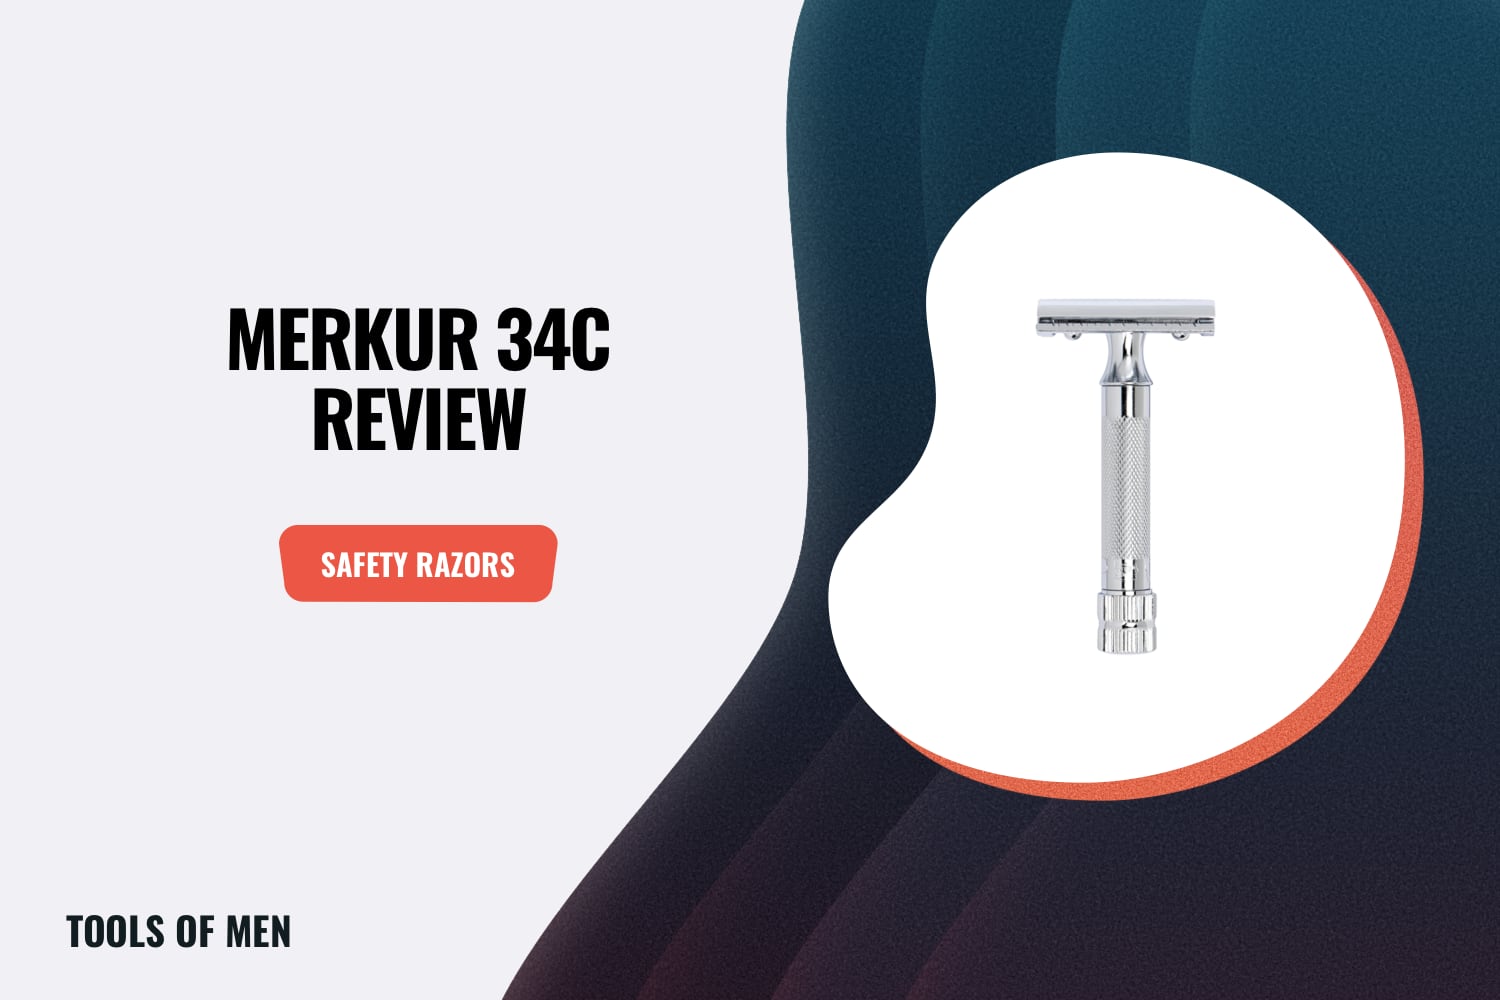 Merkur 34c Review feature image